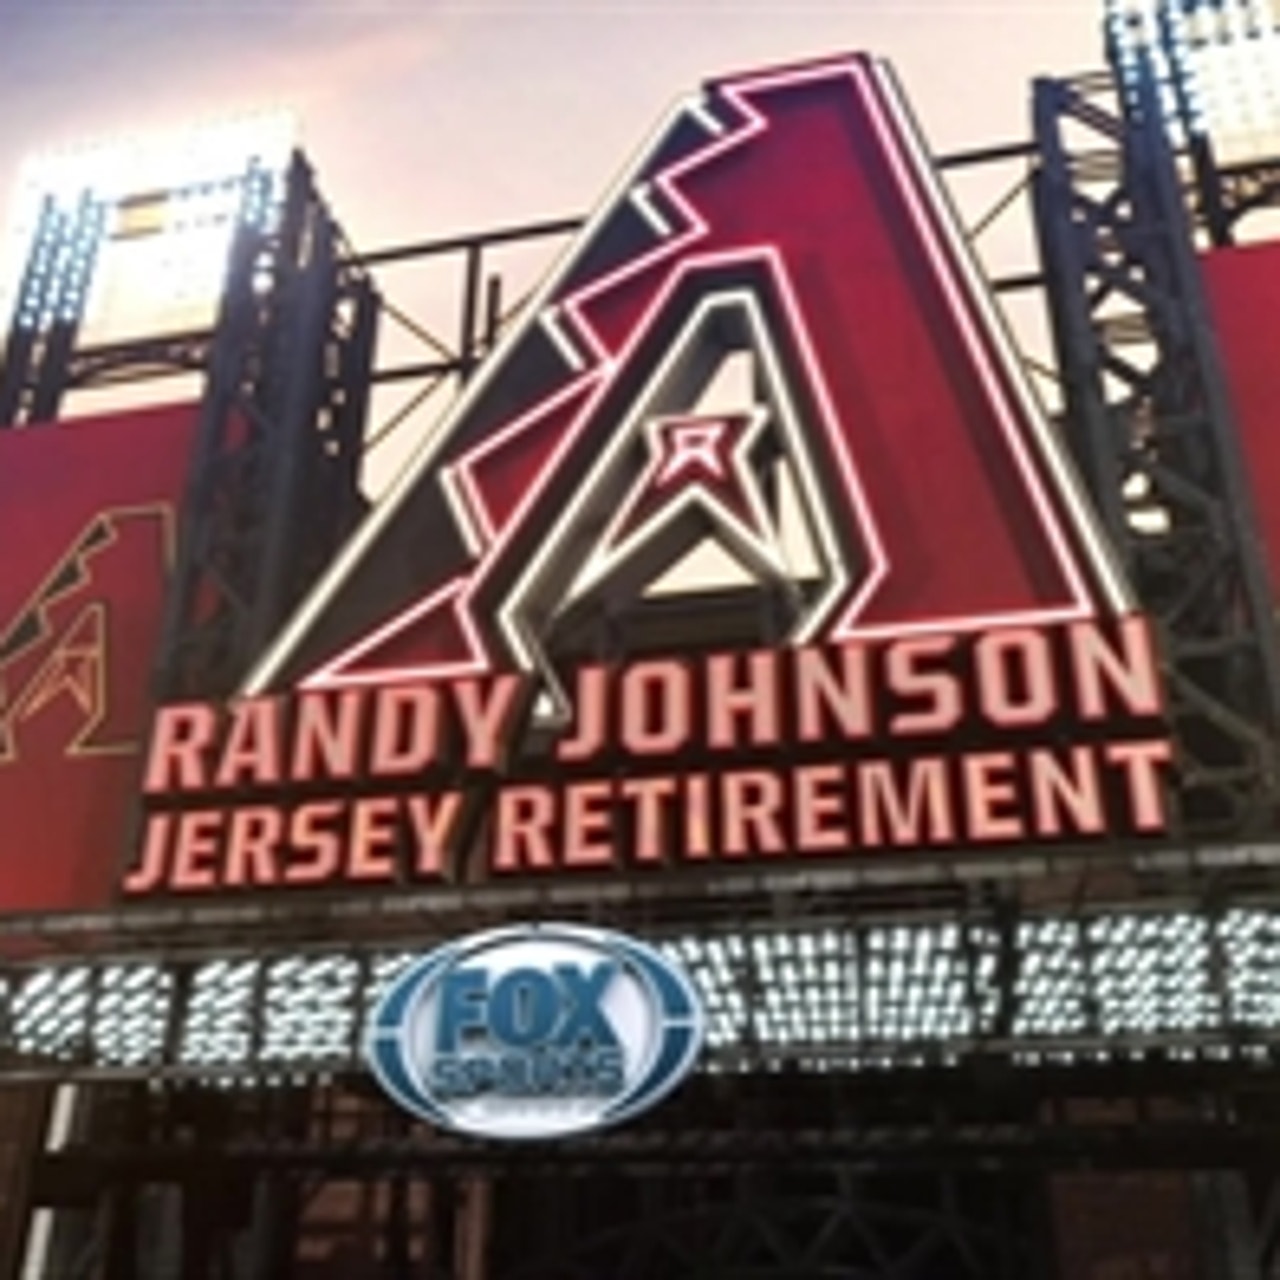 Randy Johnson gets number retired by Diamondbacks